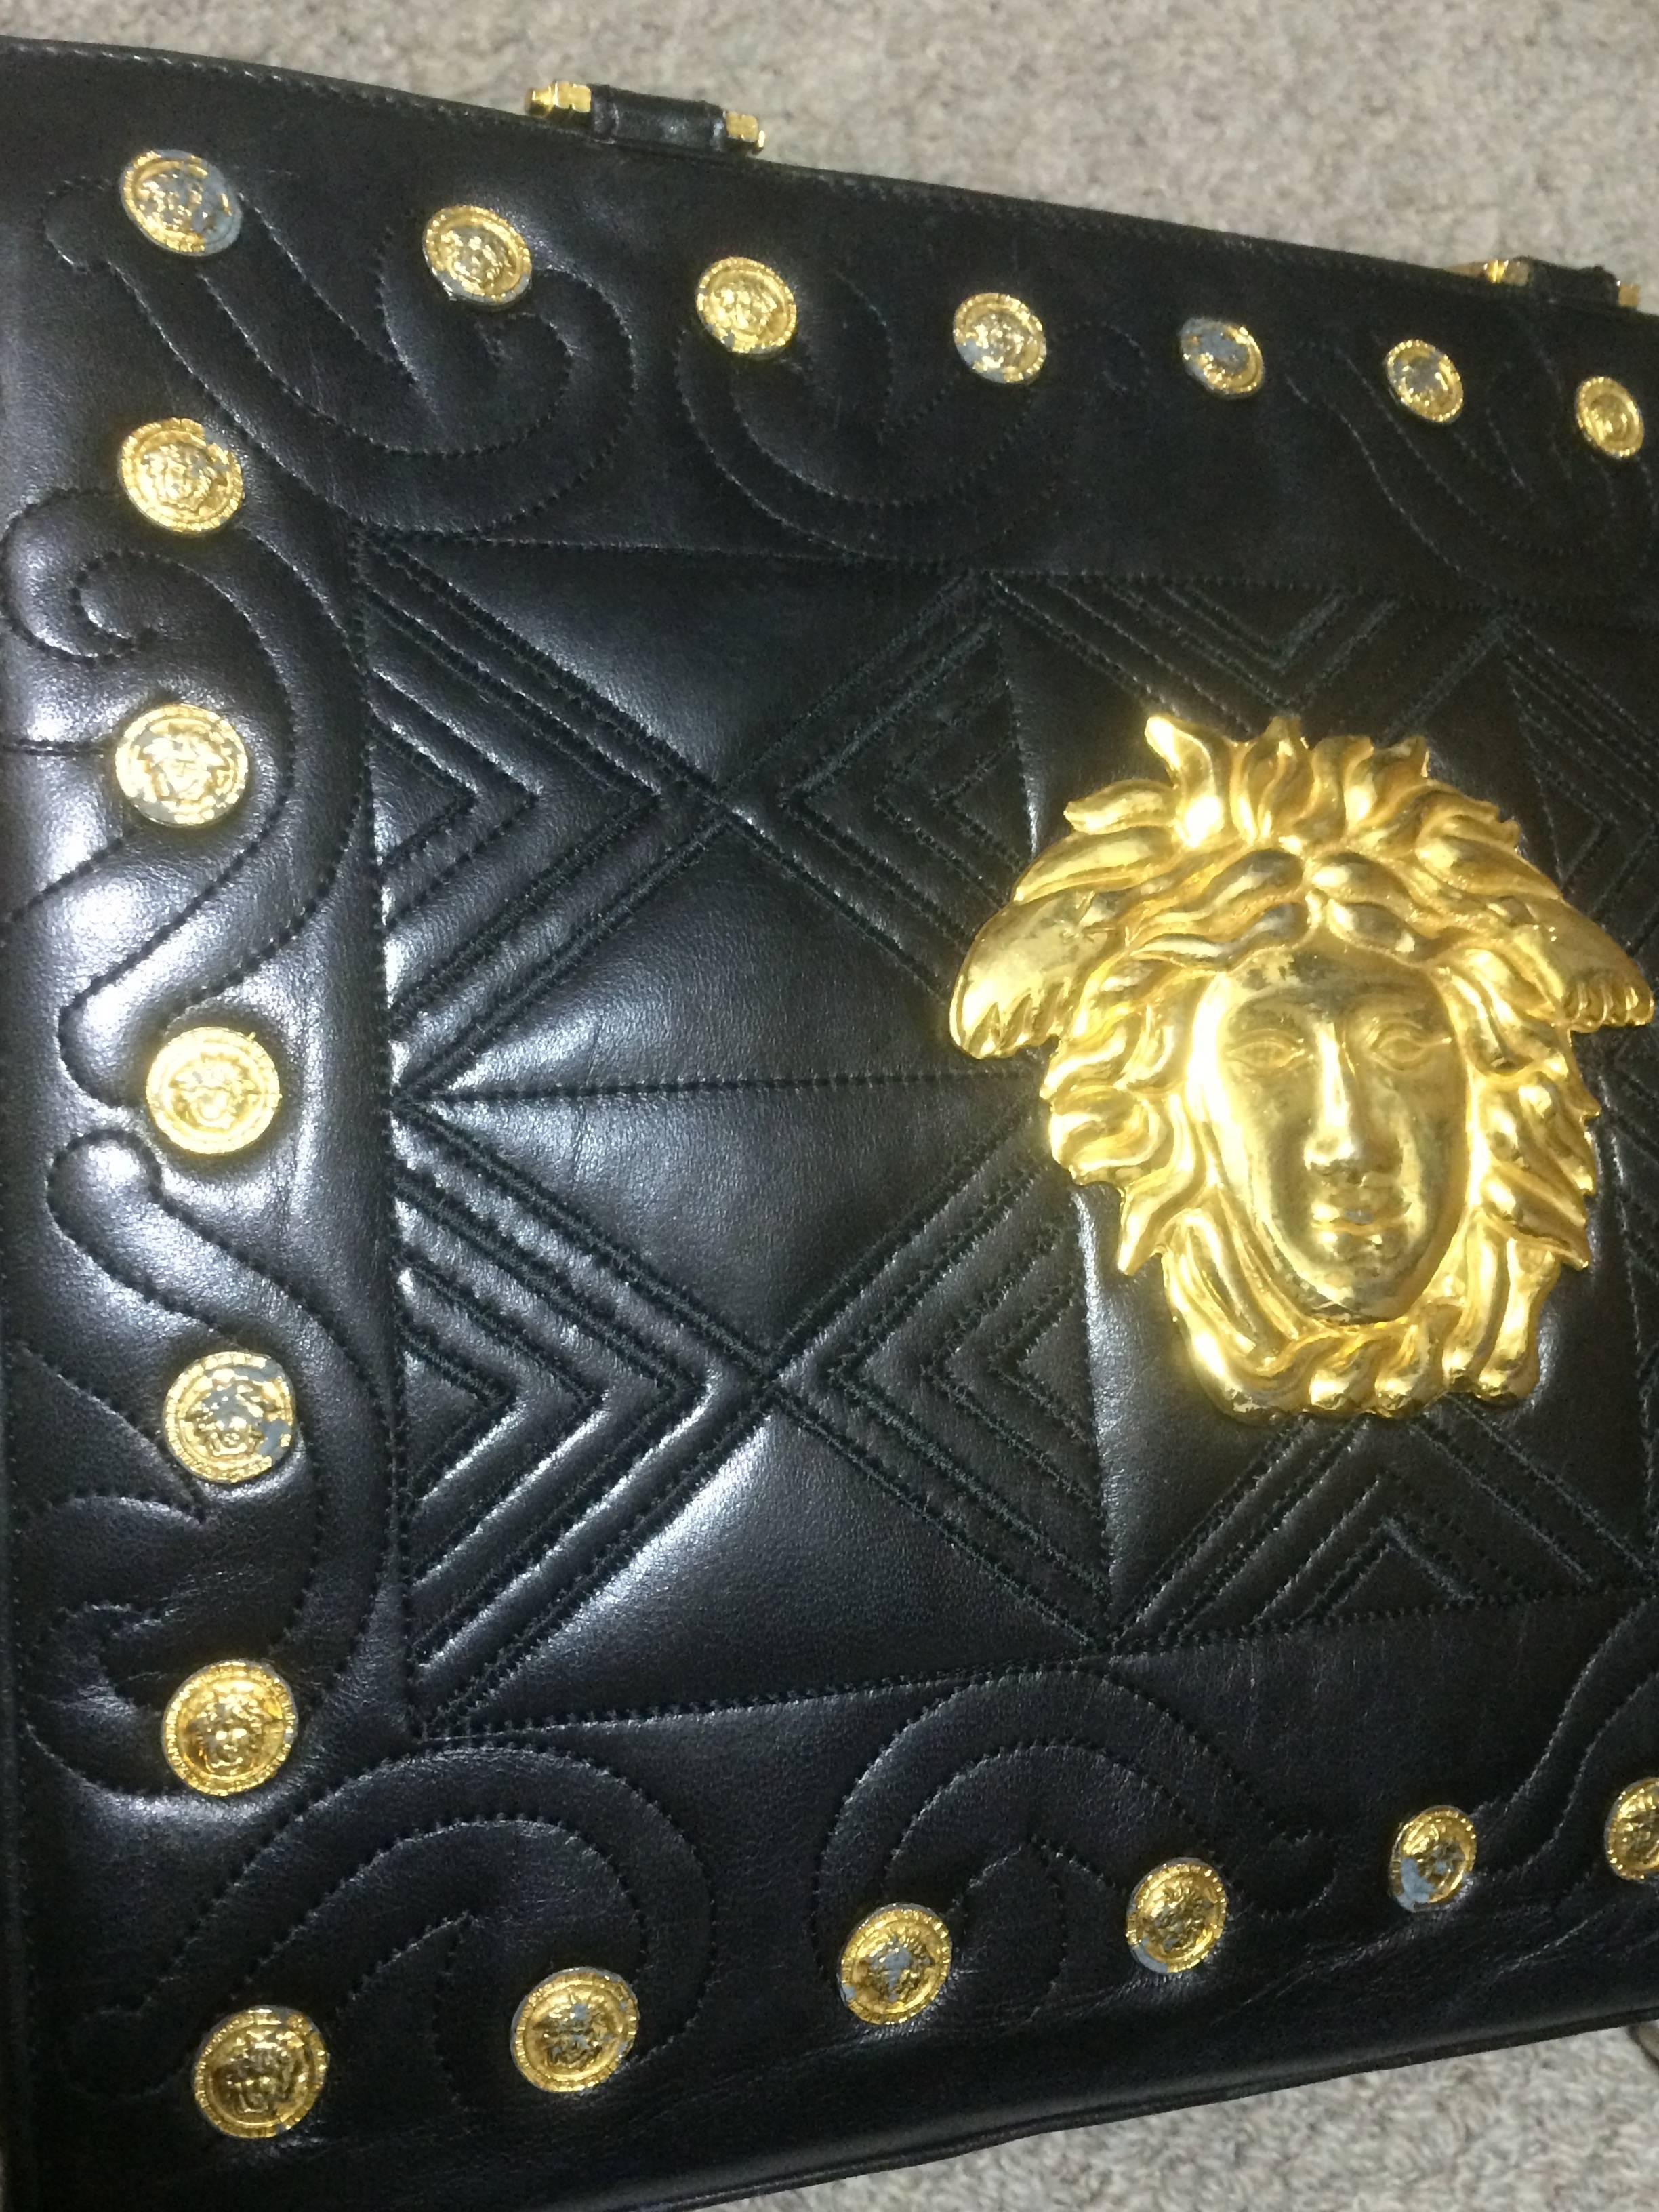 Black Vintage Gianni Versace black tote bag with golden medusa charms and handles.